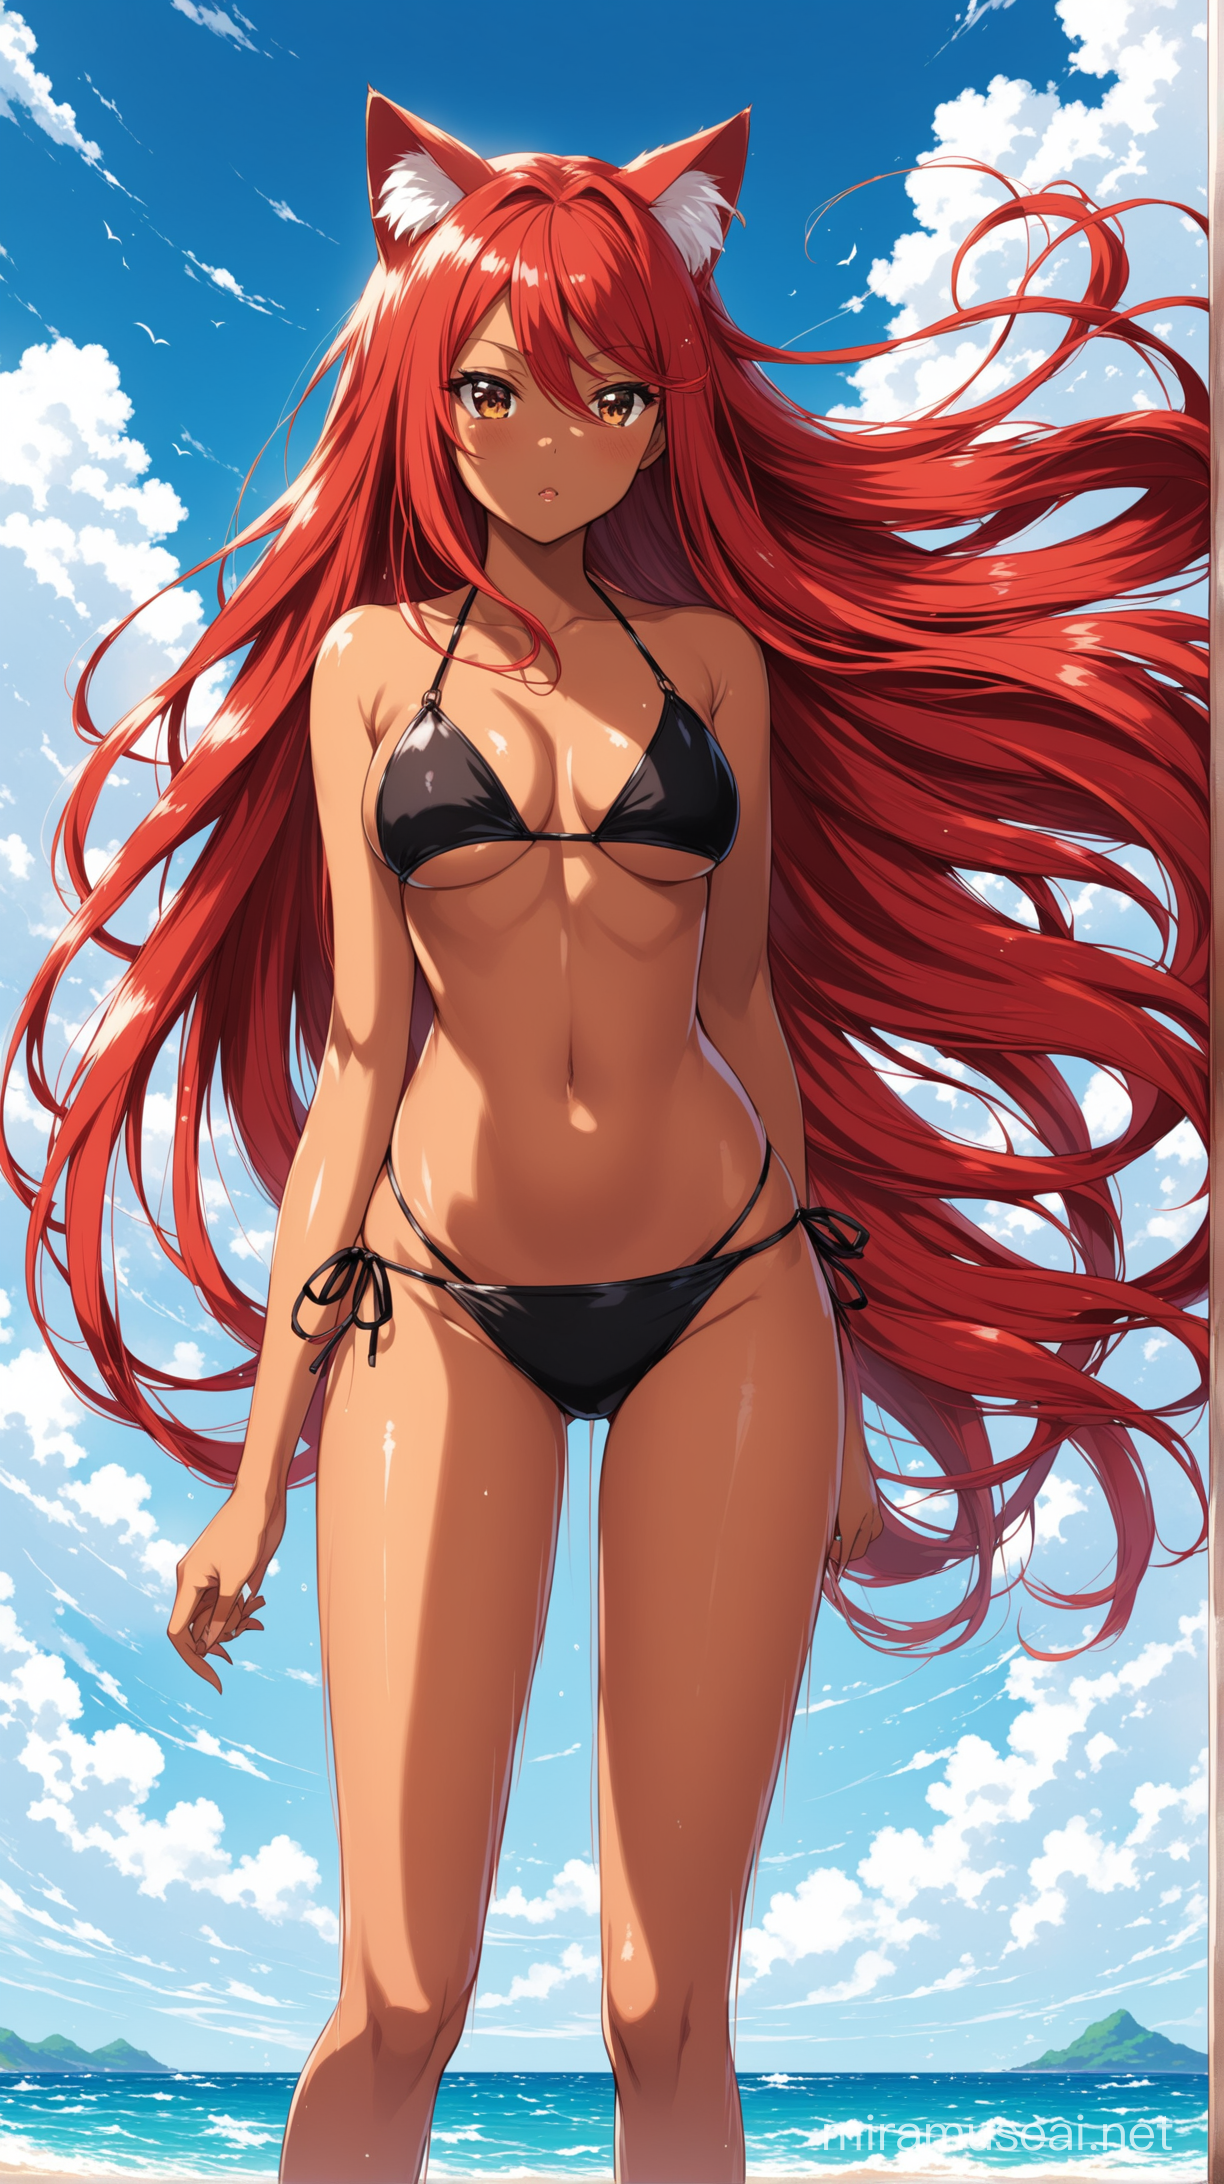 Seductive Anime Catgirl with Long Red Hair on Beach